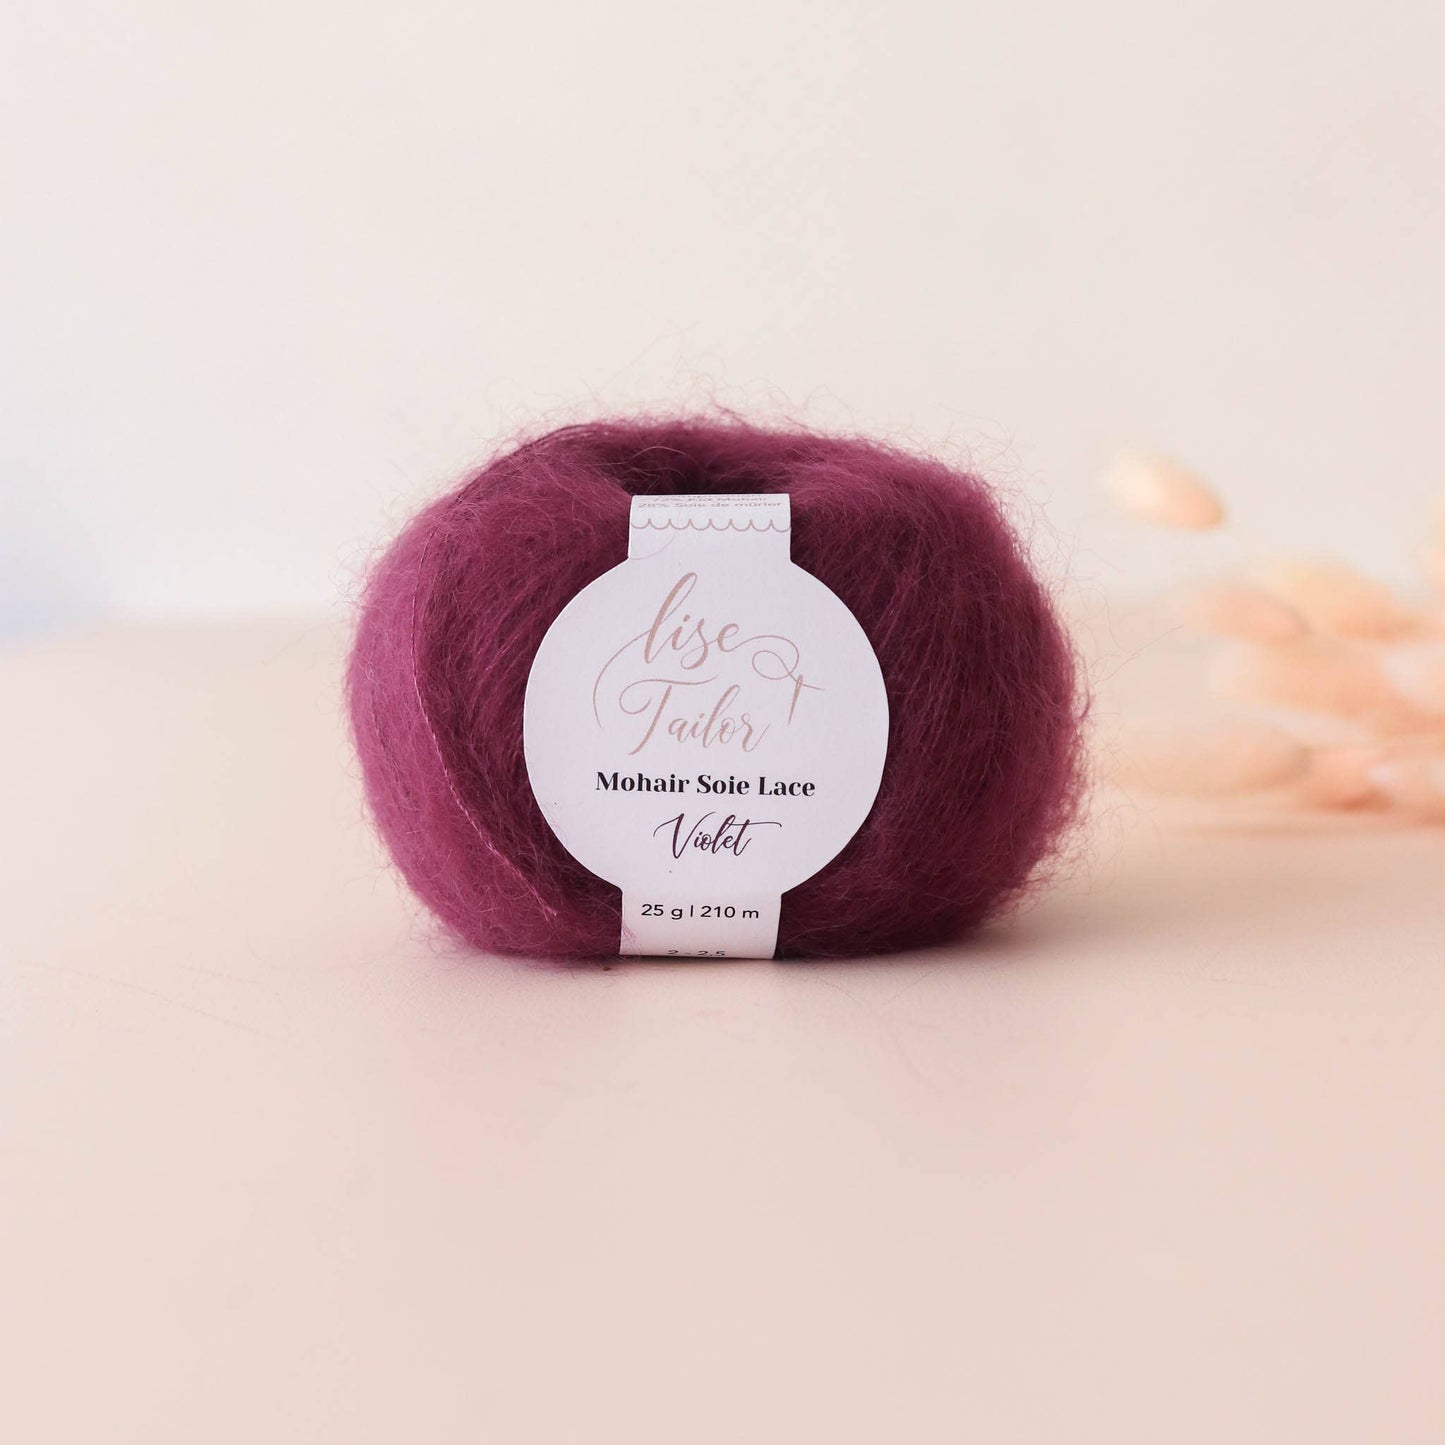 Lise Tailor Violet Mohair Wool & Silk Yarn